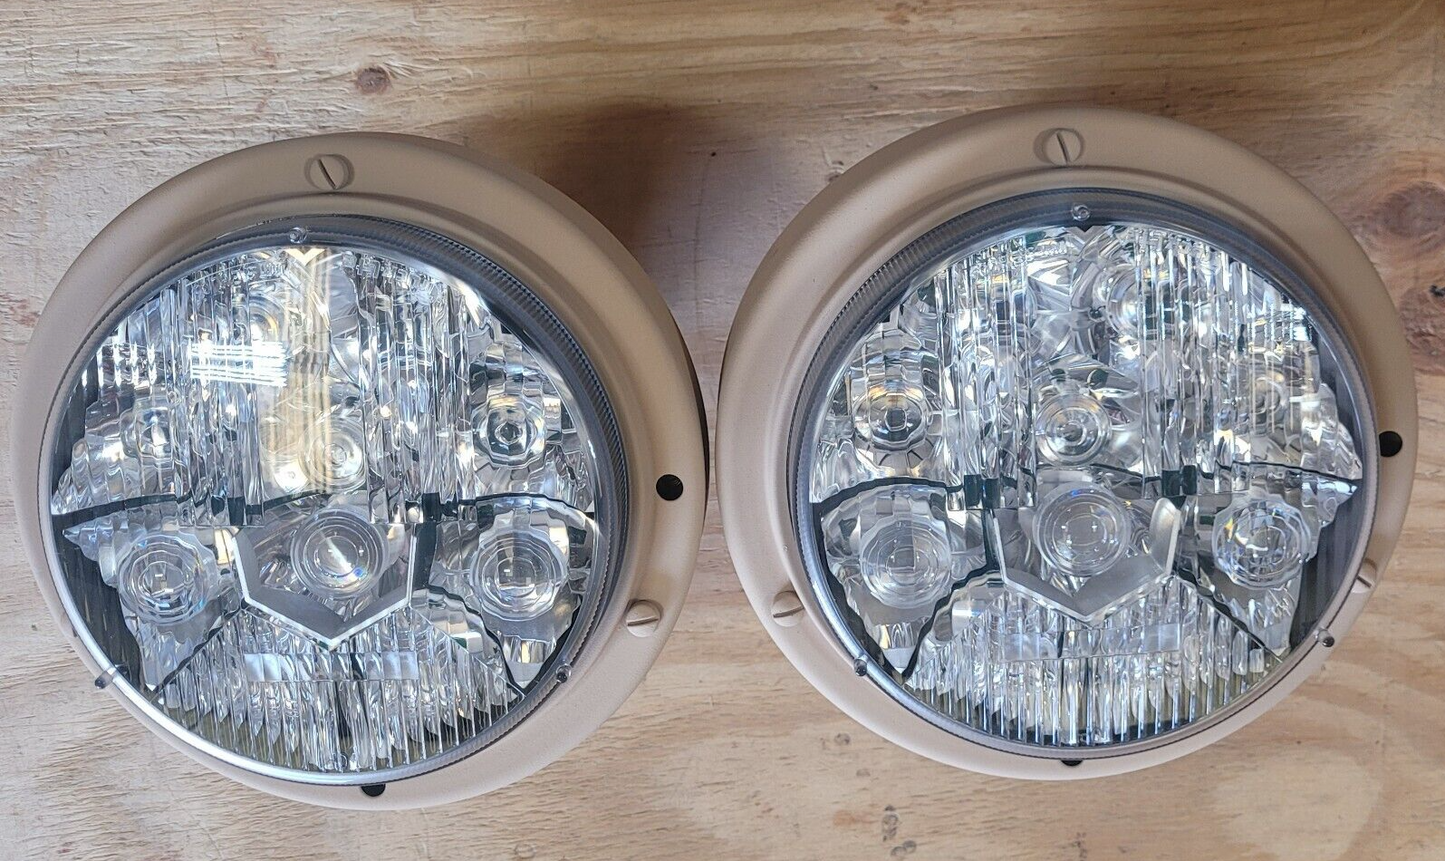 NEW LED Headlight Brake Light Blinker Kit Tan HUMVEE M998 HUMMER Trucklite HMMWV M35A2 A3 M35 M939 M809